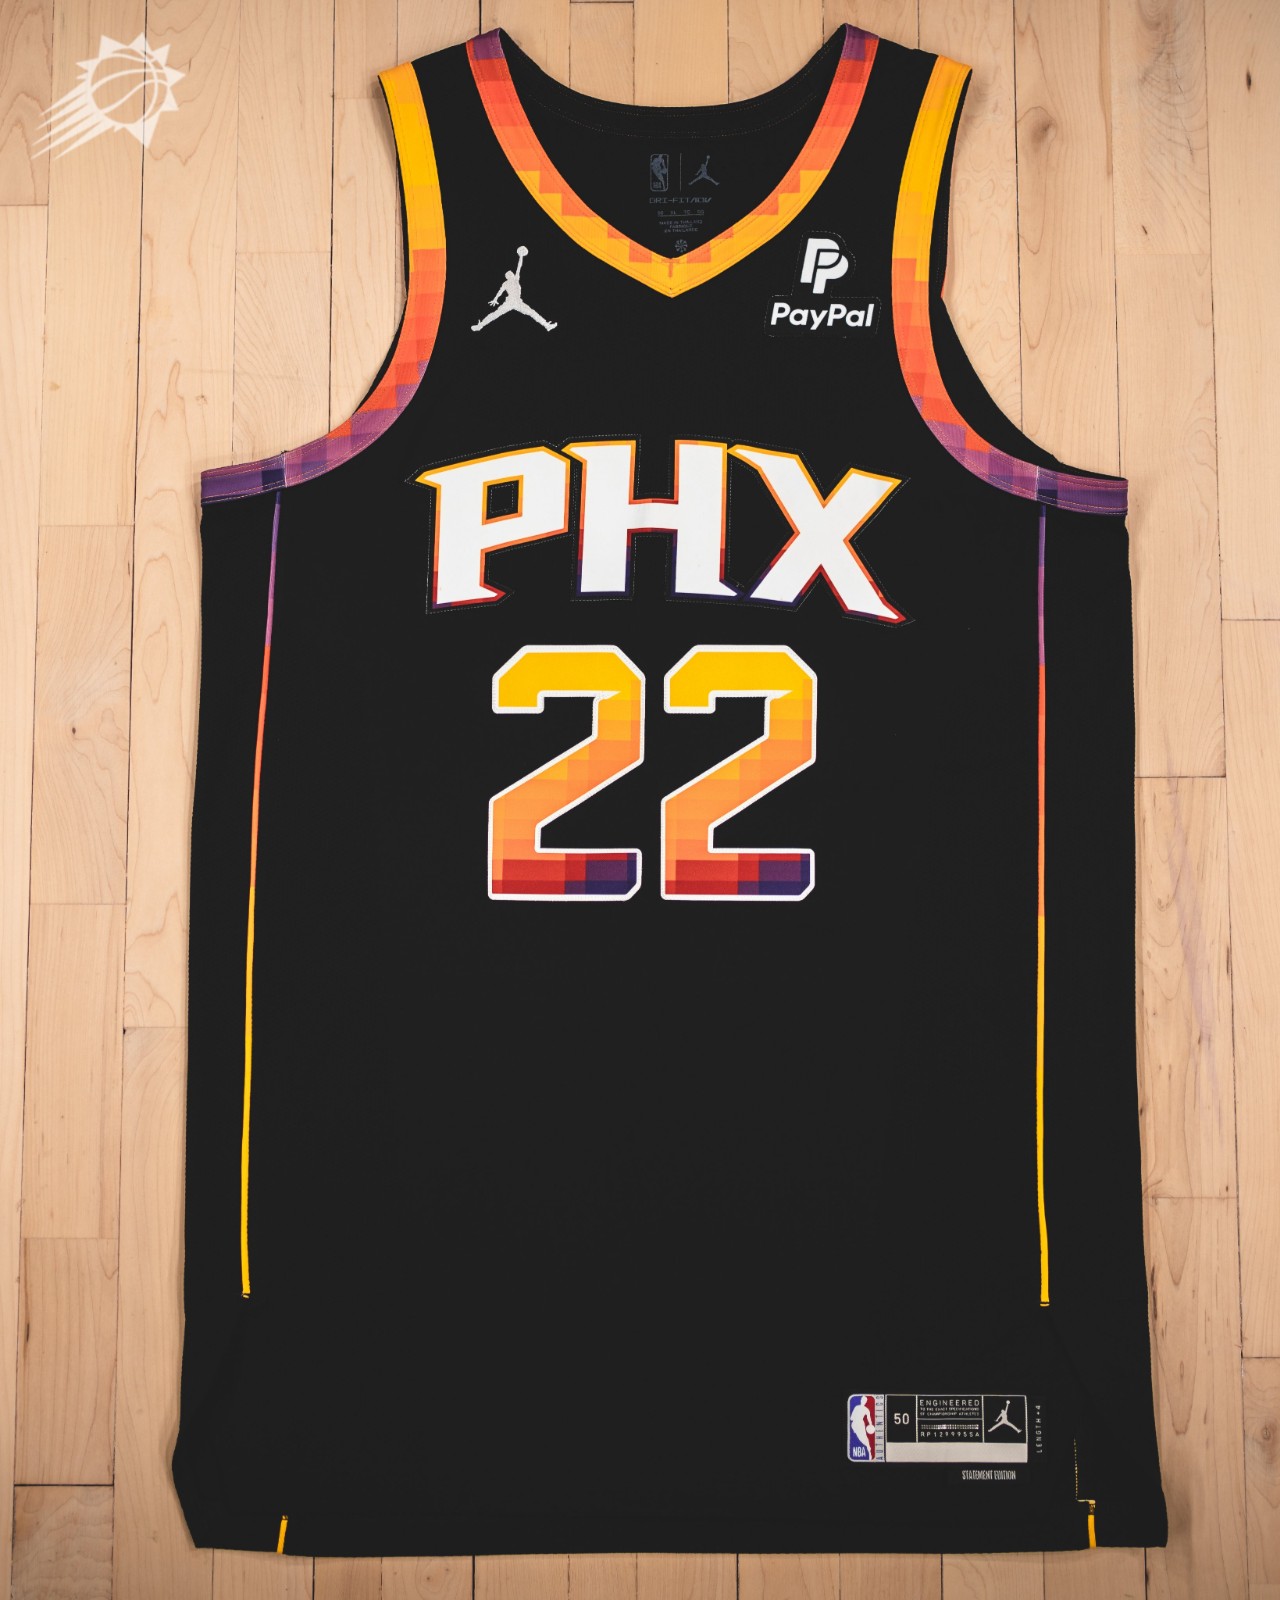 Phoenix Suns 202223 Statement Jersey Revealed